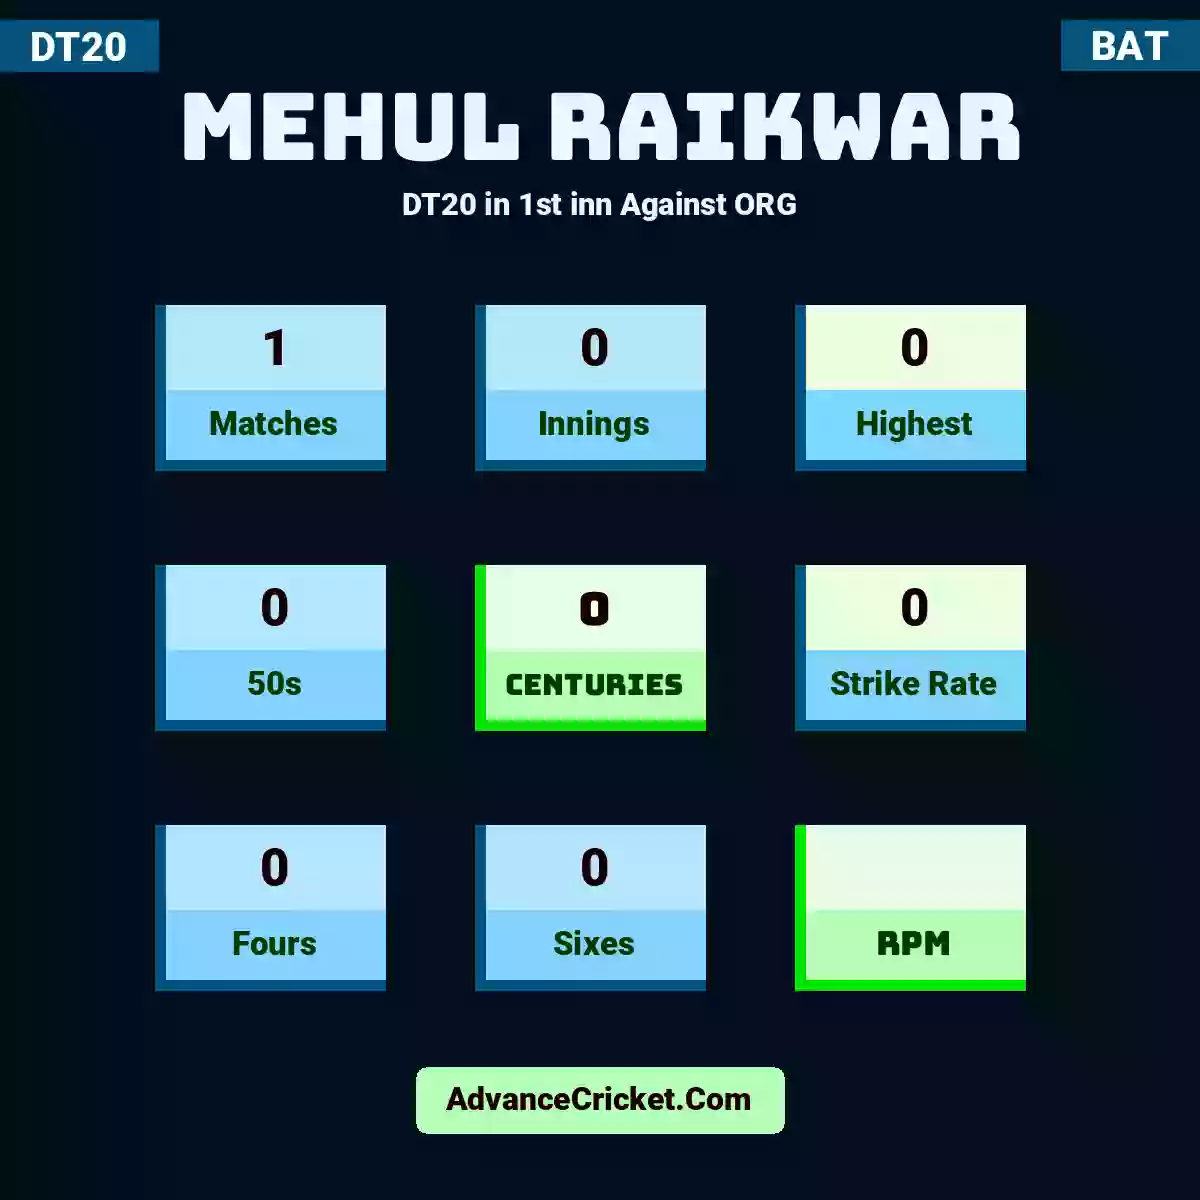 Mehul Raikwar DT20  in 1st inn Against ORG, Mehul Raikwar played 1 matches, scored 0 runs as highest, 0 half-centuries, and 0 centuries, with a strike rate of 0. M.Raikwar hit 0 fours and 0 sixes.